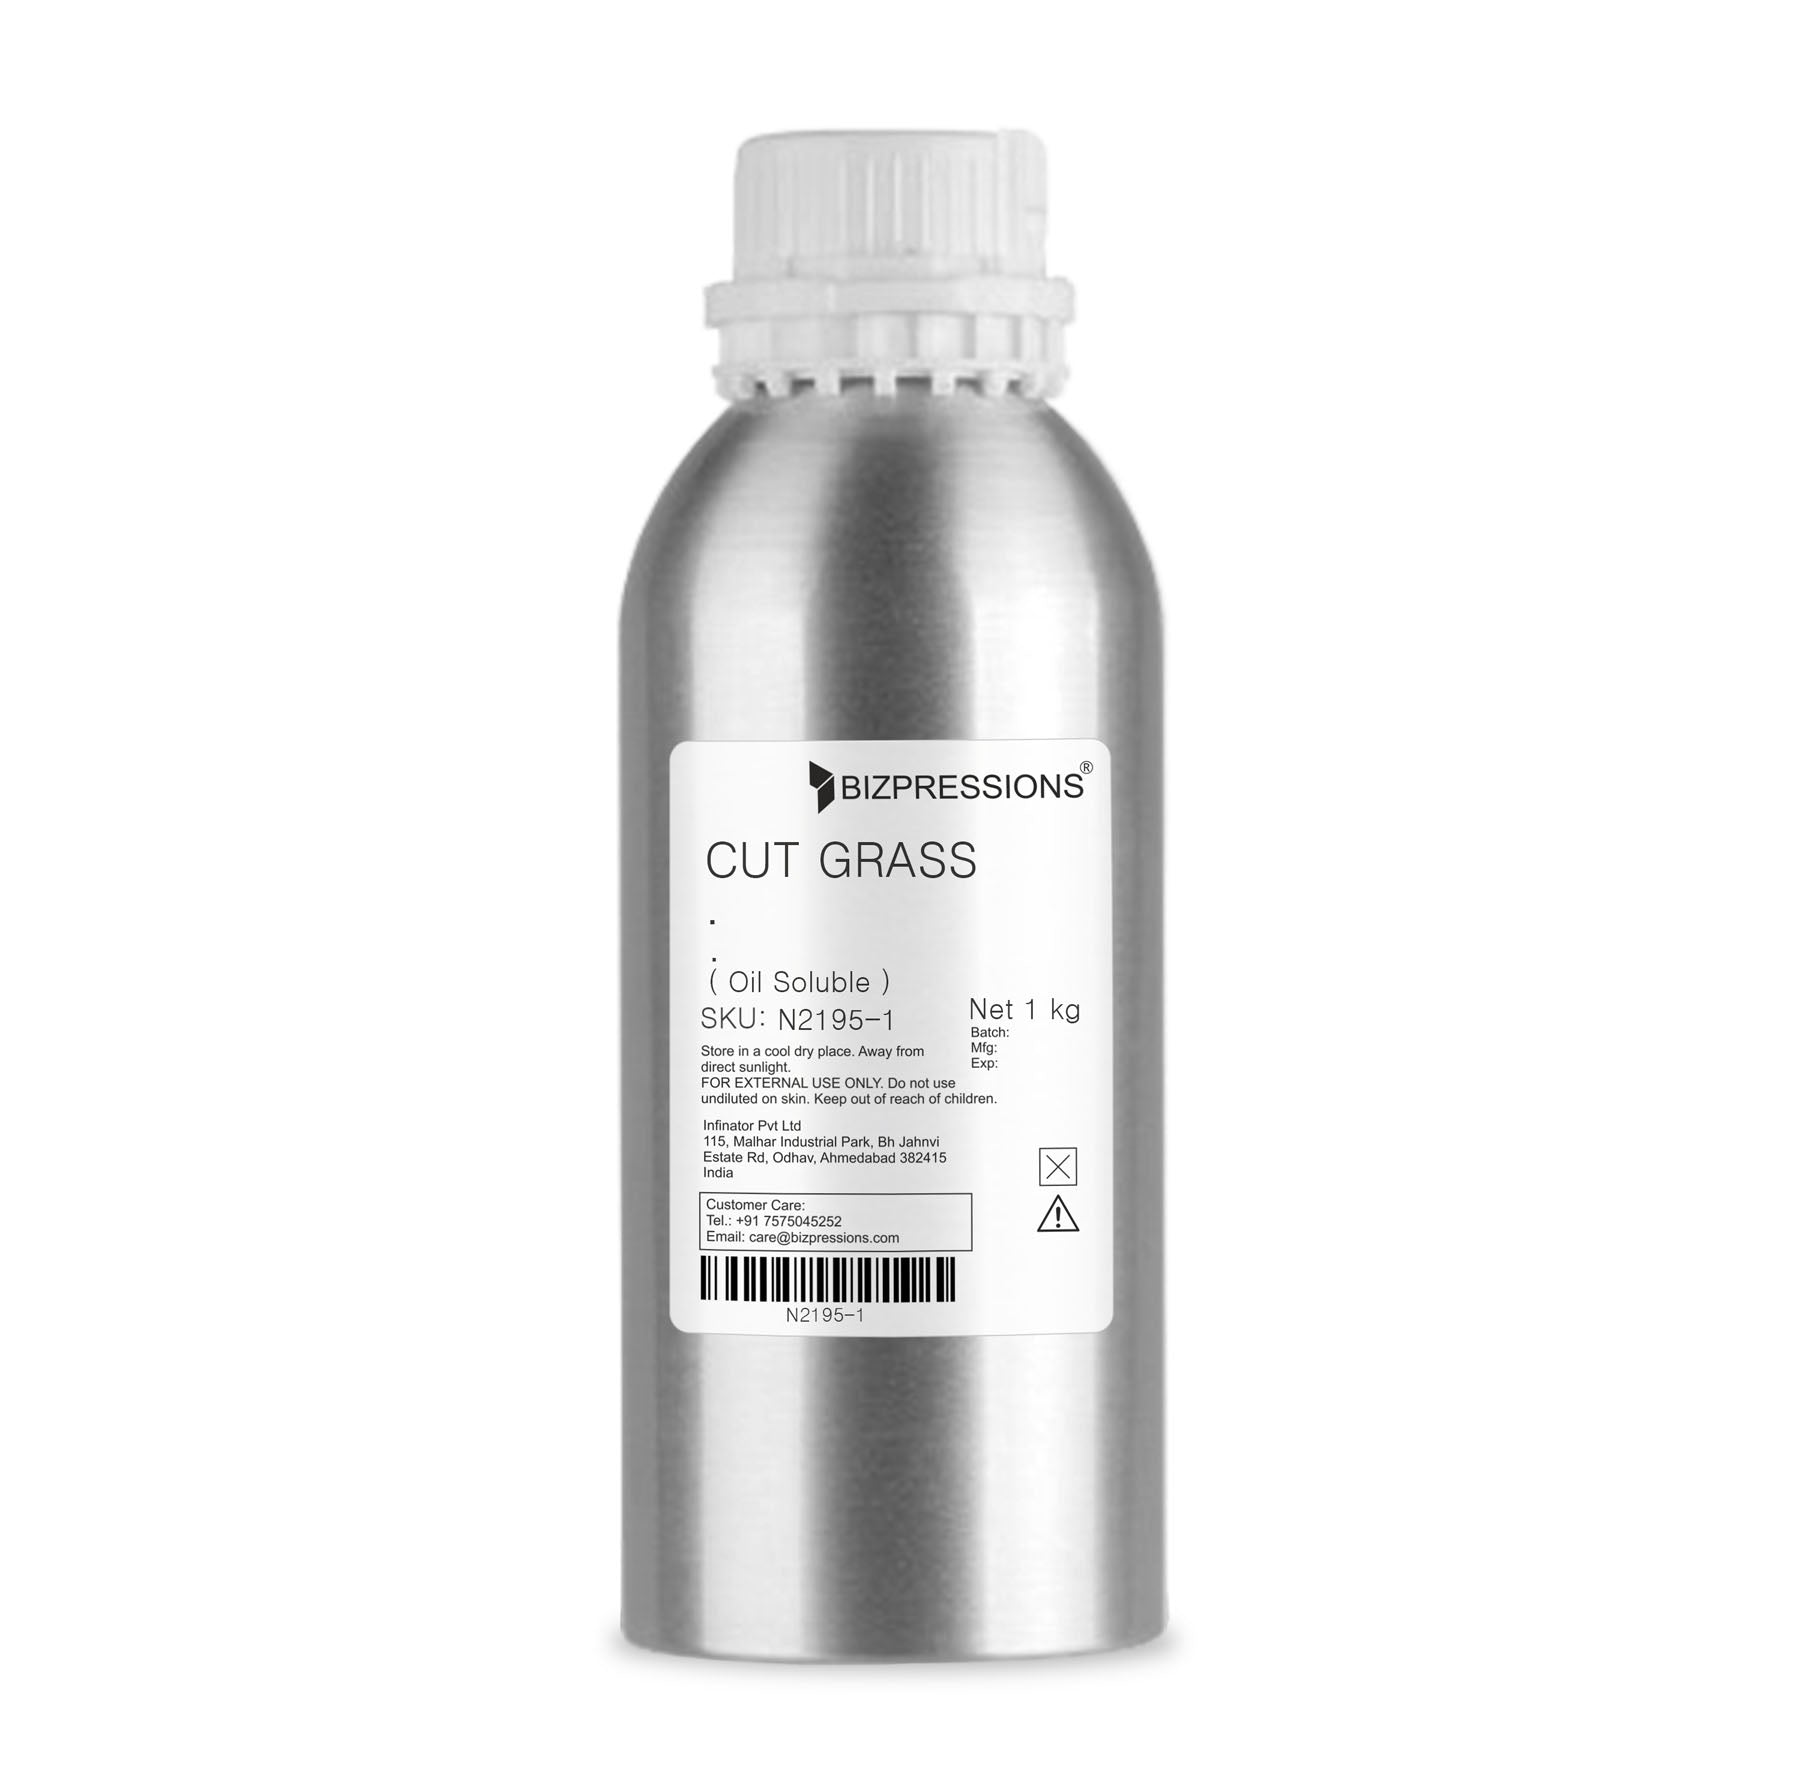 CUT GRASS - Fragrance ( Oil Soluble ) - 1 kg